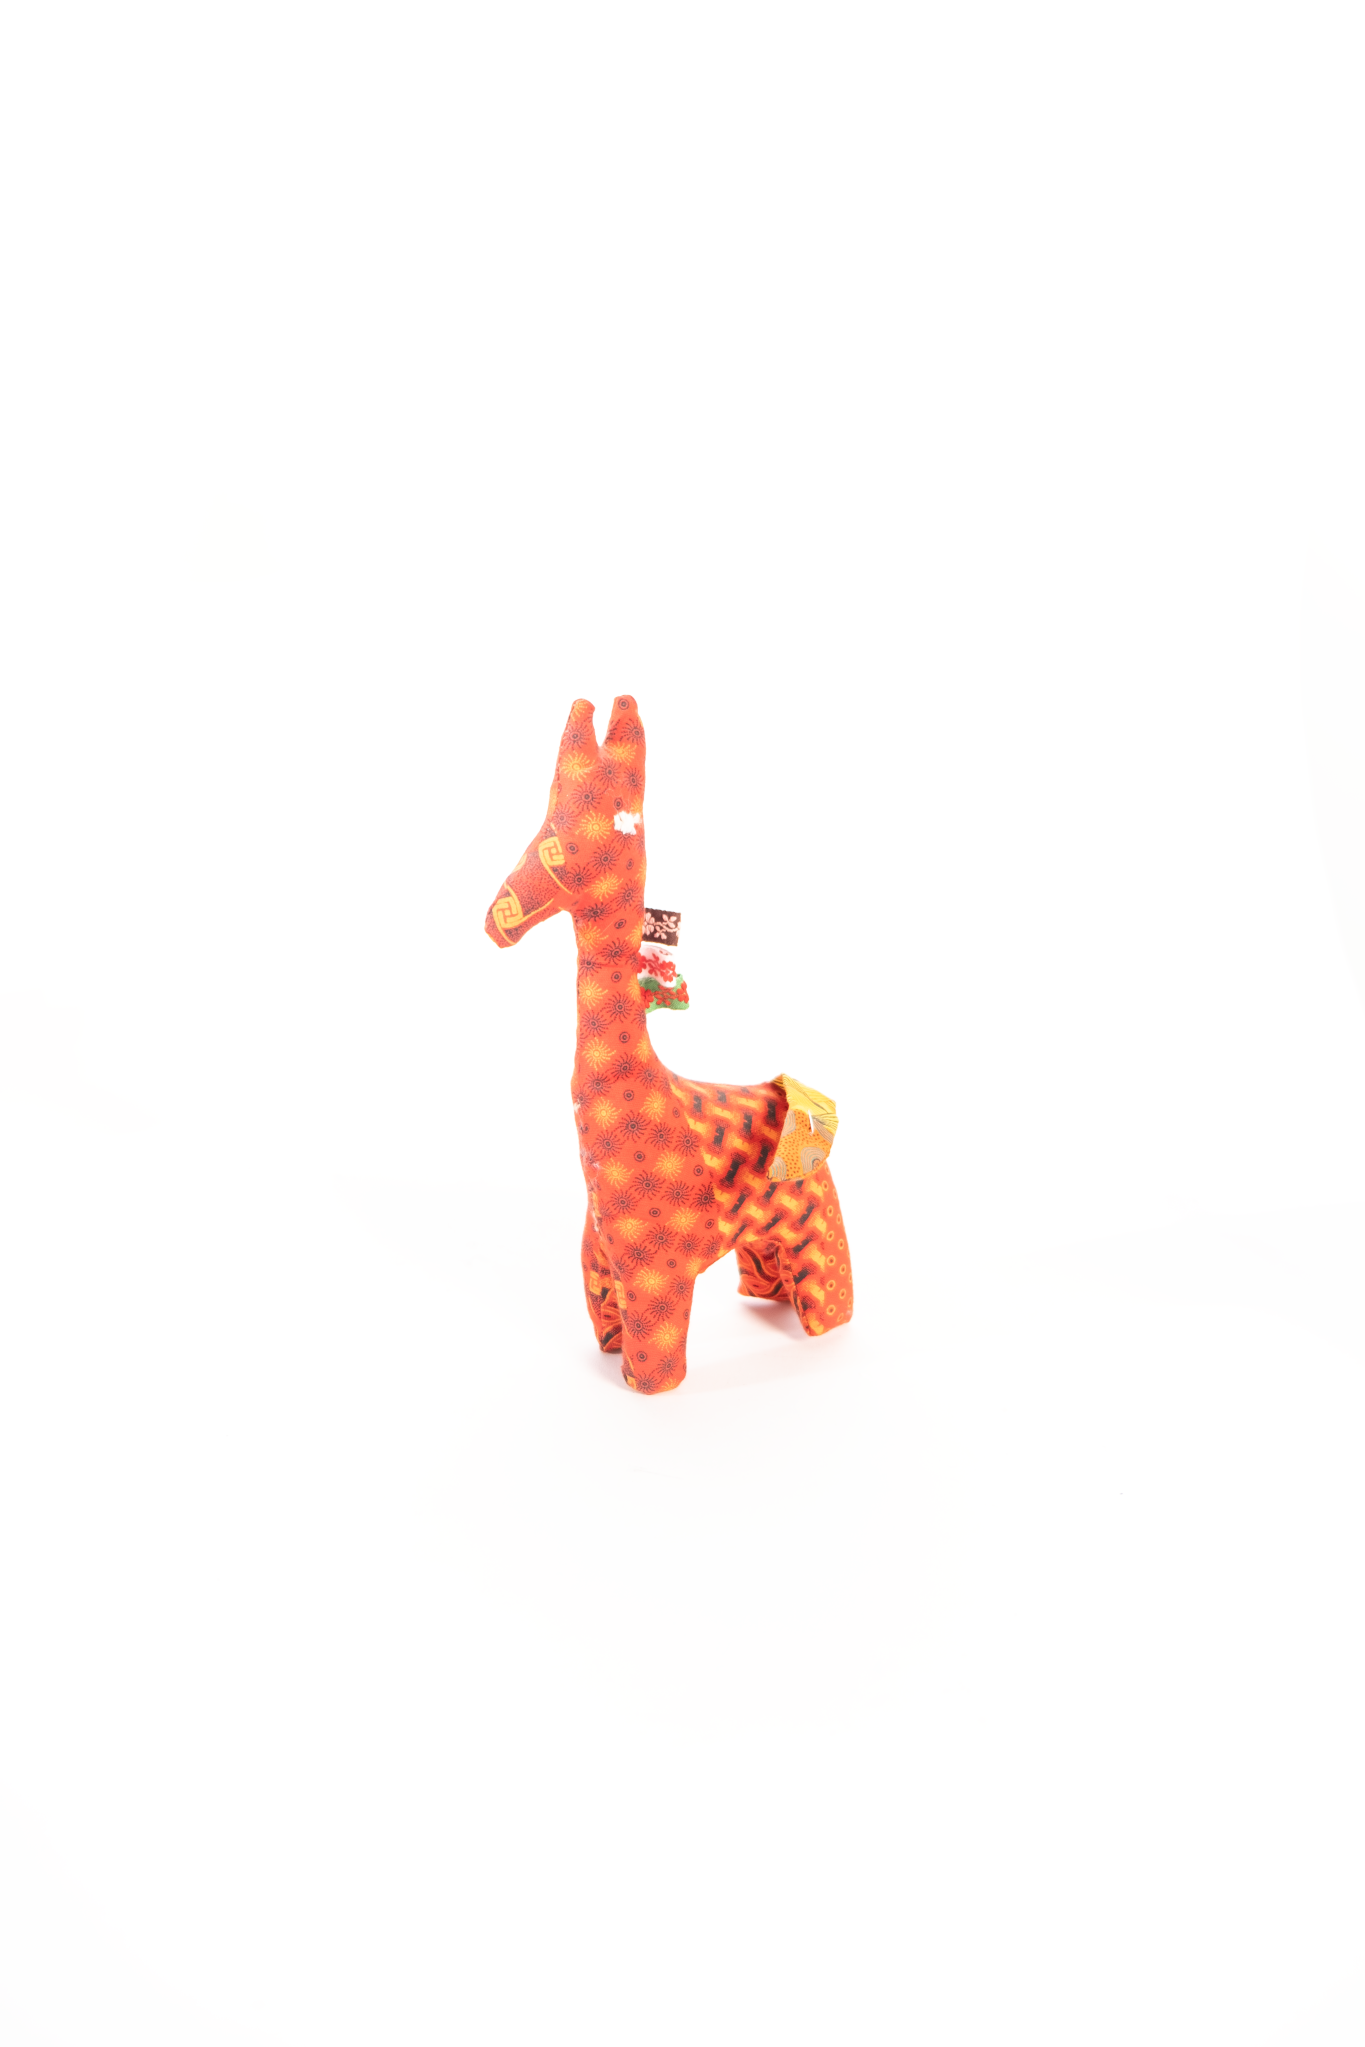 Iyaloo - Petite peluche Shwe Shwe girafe faite à la main